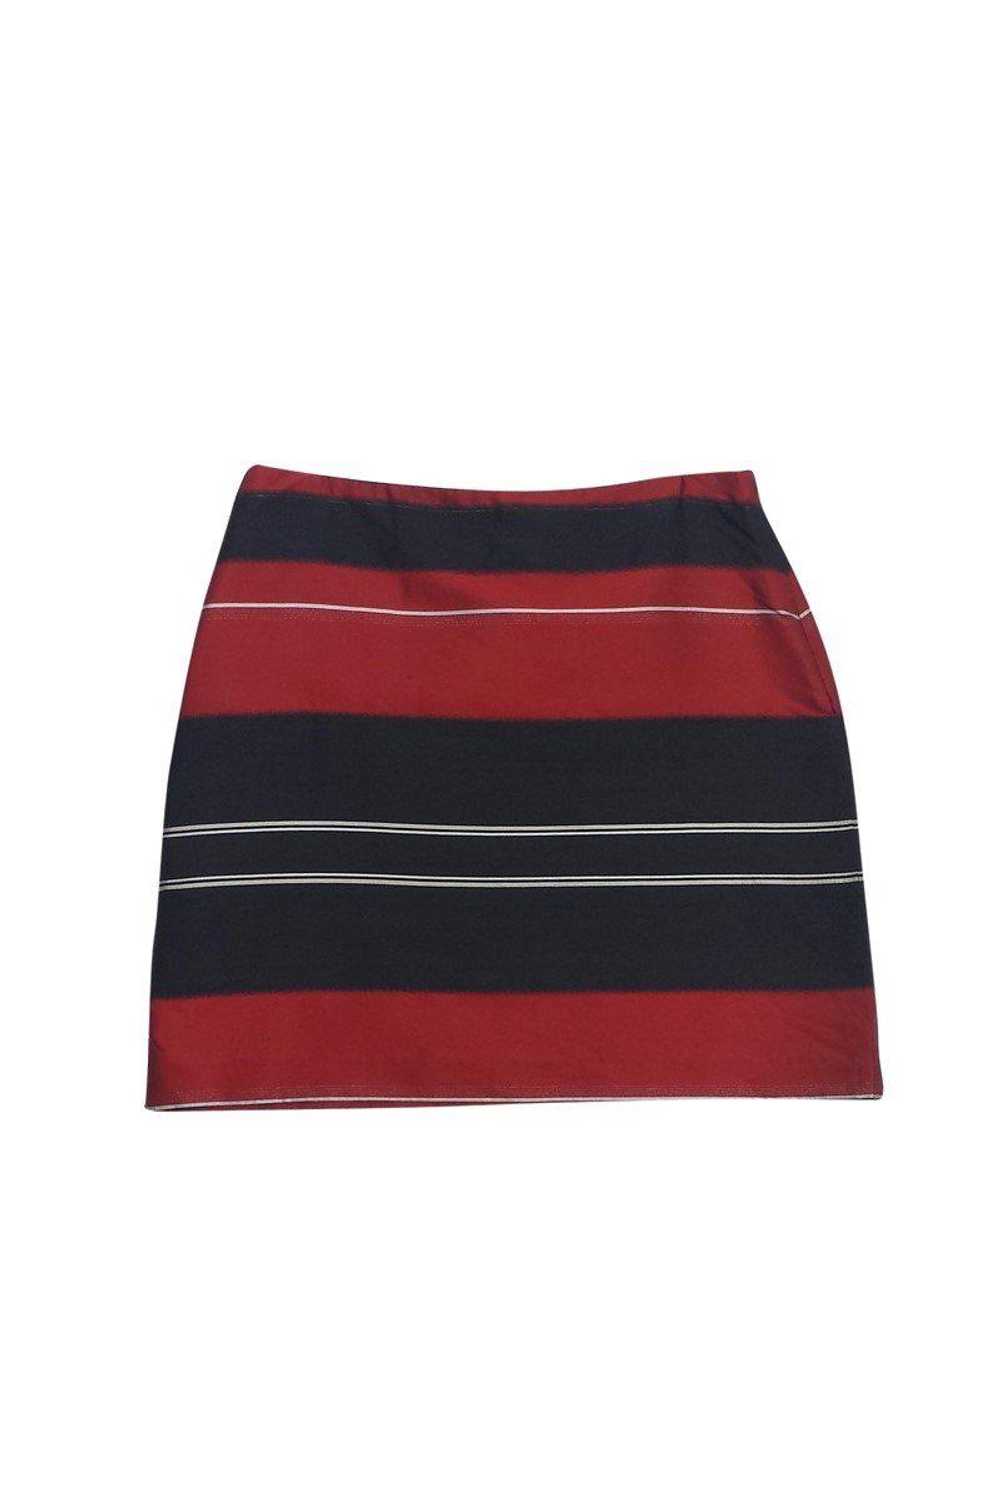 Michael Kors - Red & Black Striped Miniskirt Sz 10 - image 1